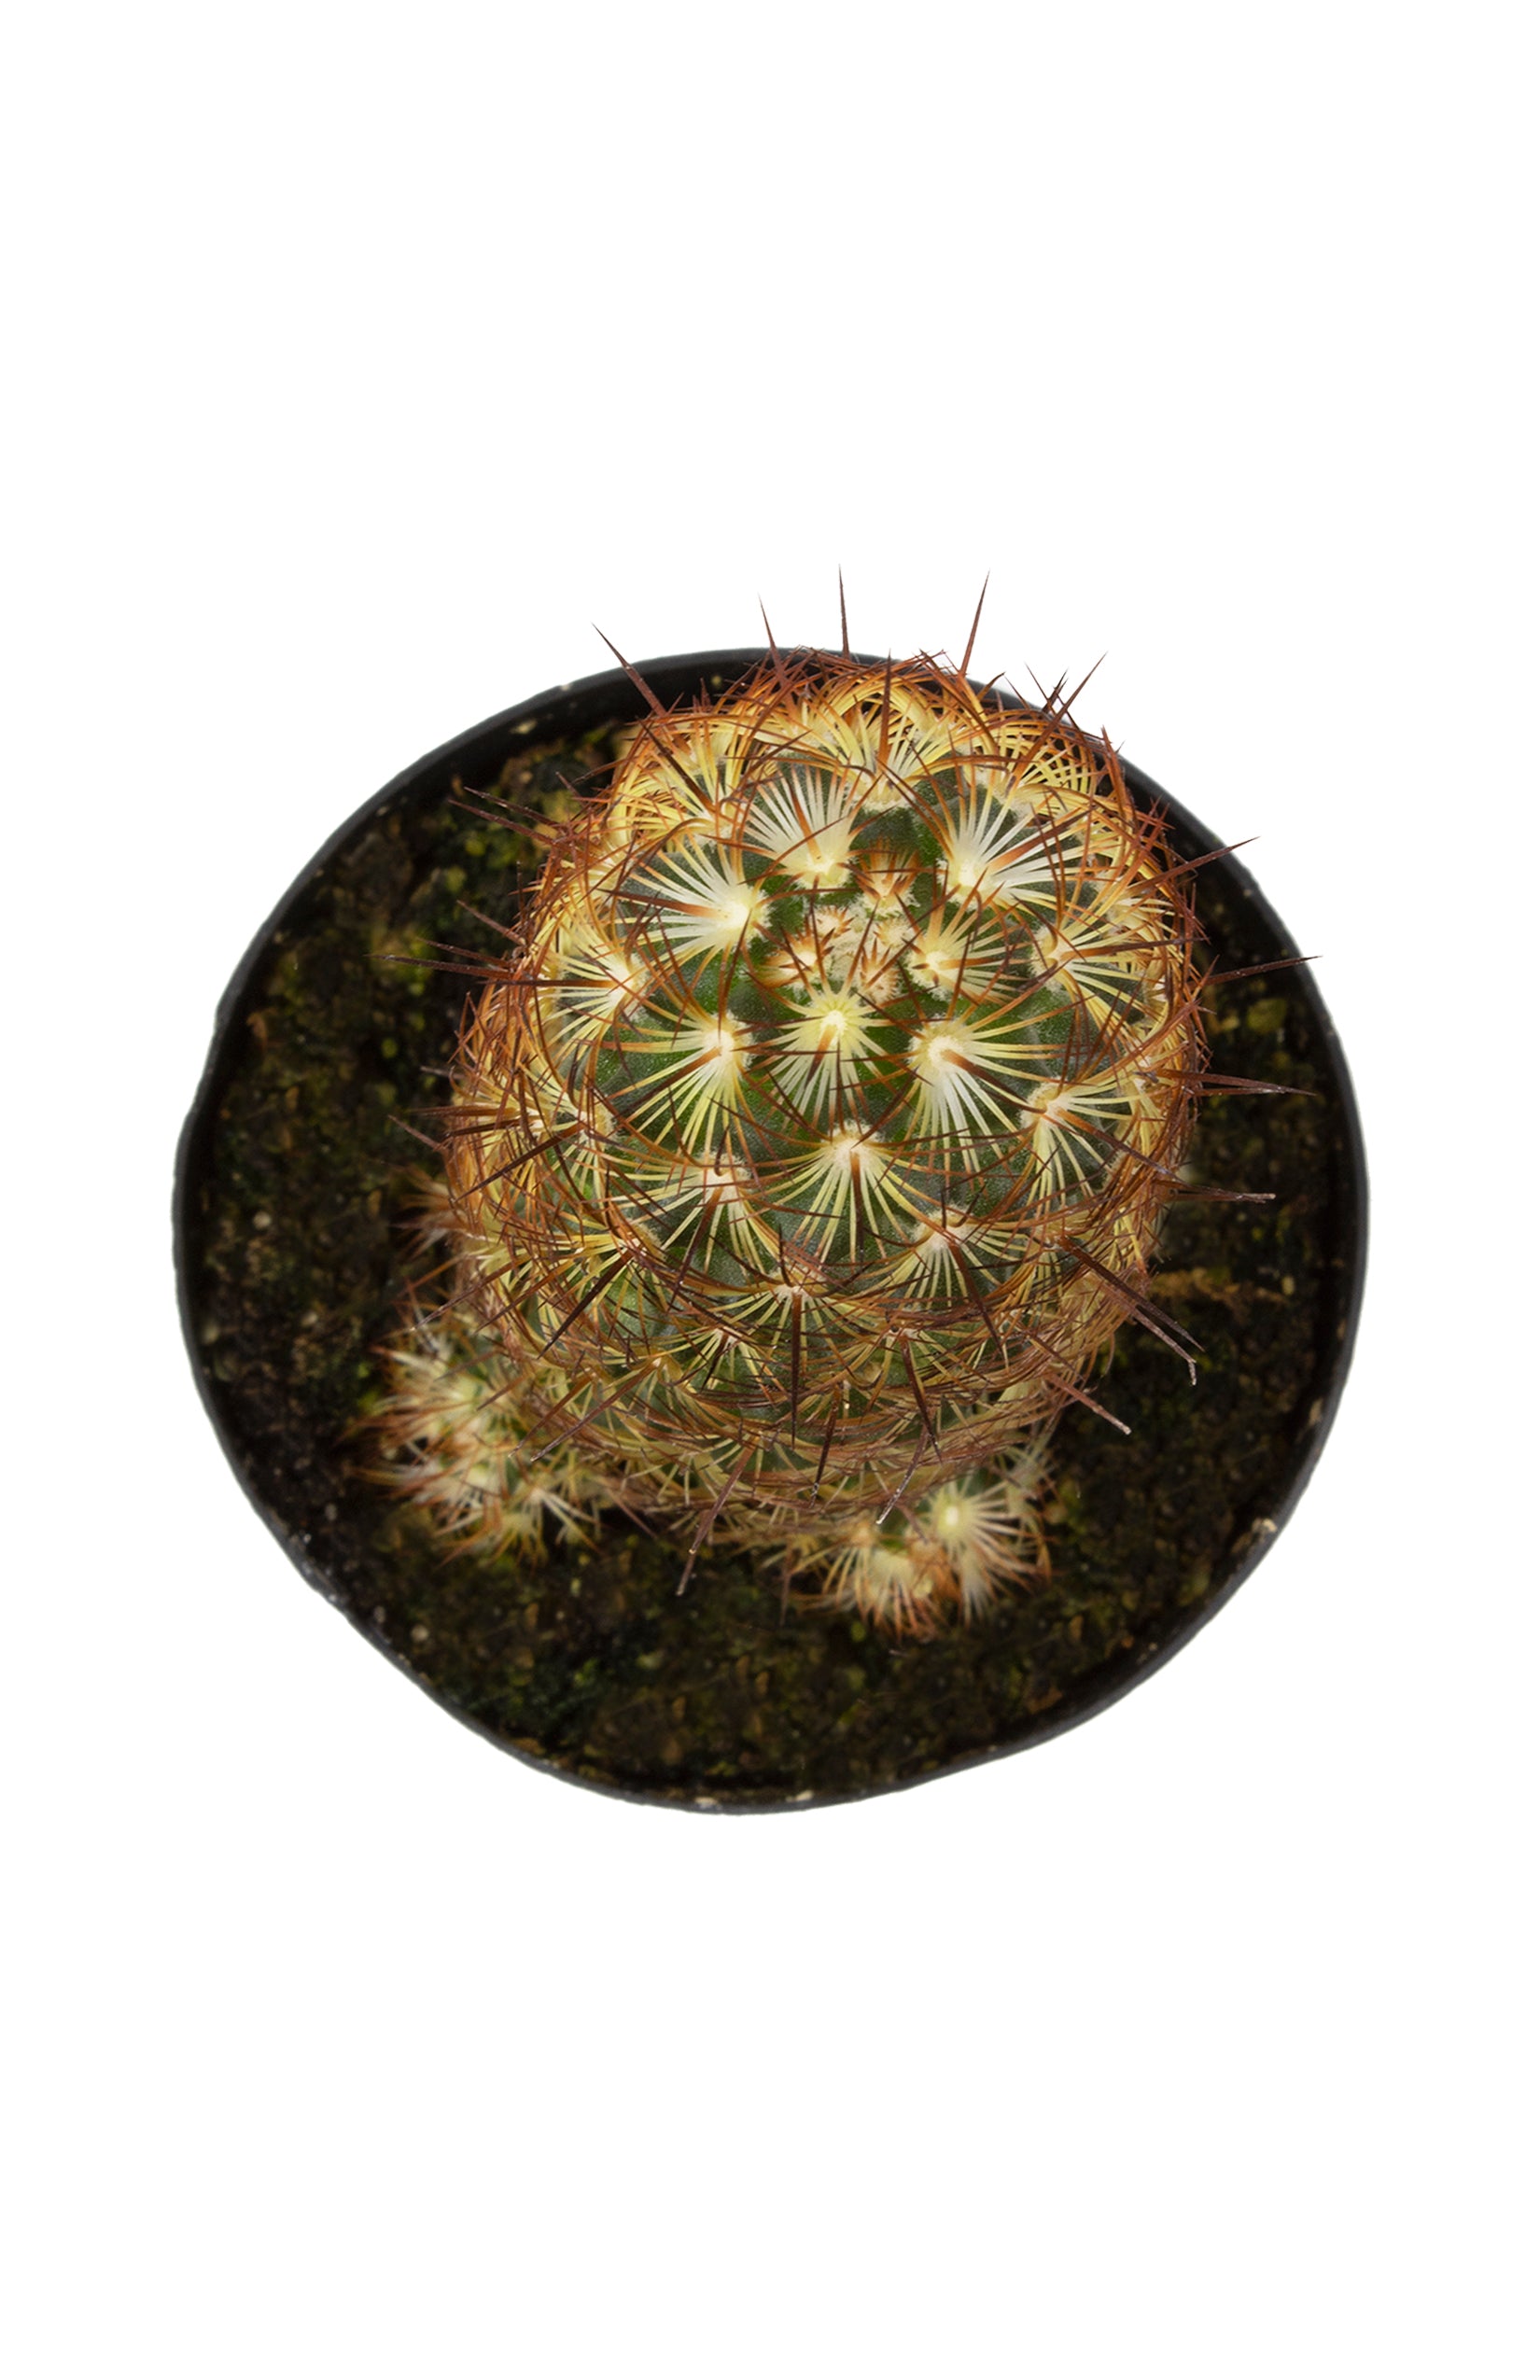 Mammillaria elongata ‘Copper King’